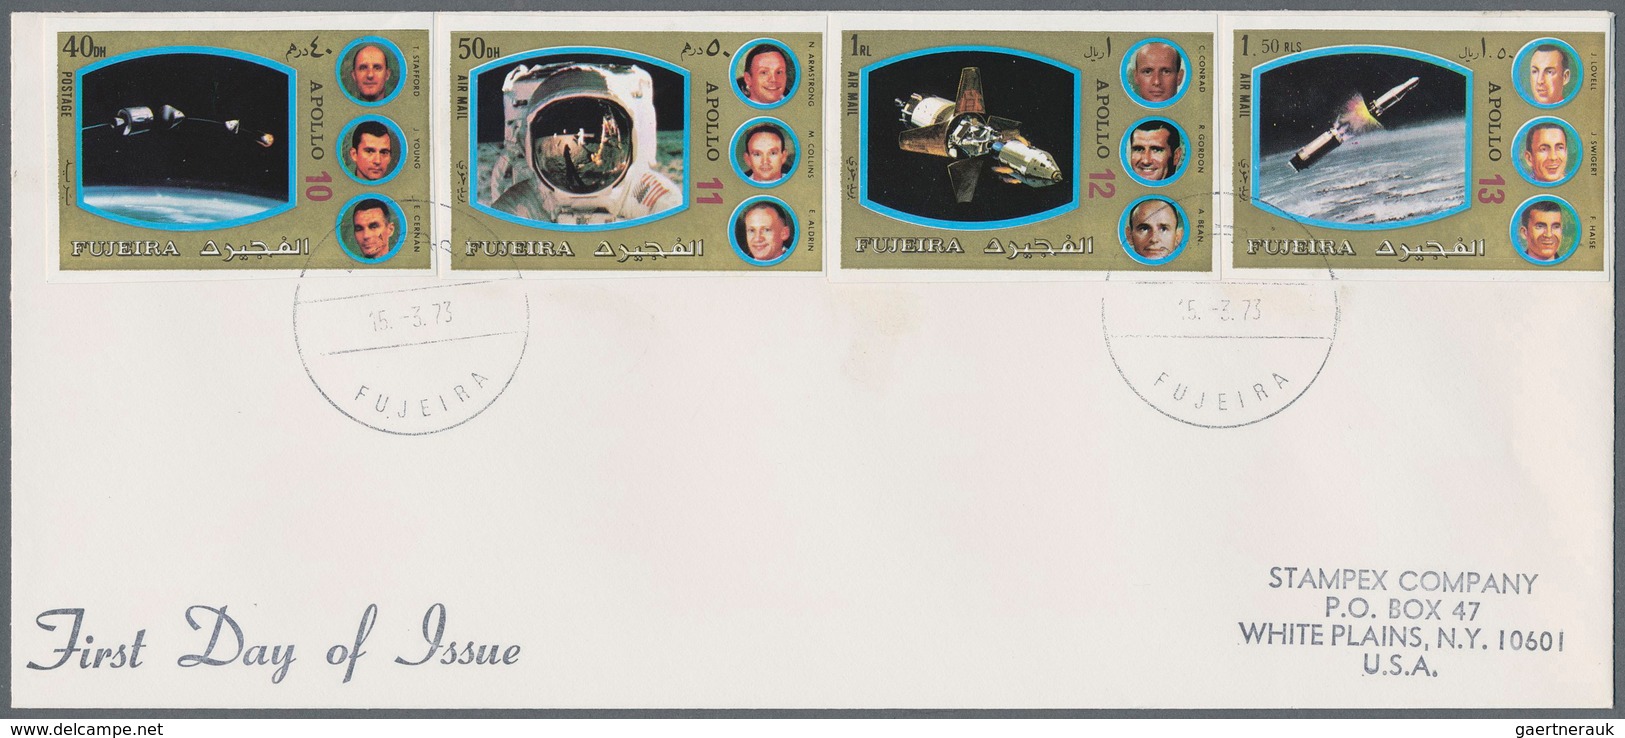 25463 Thematik: Raumfahrt / astronautics: 1969/1973, Ajman/Fujeira, group of 18 covers (registered airmail